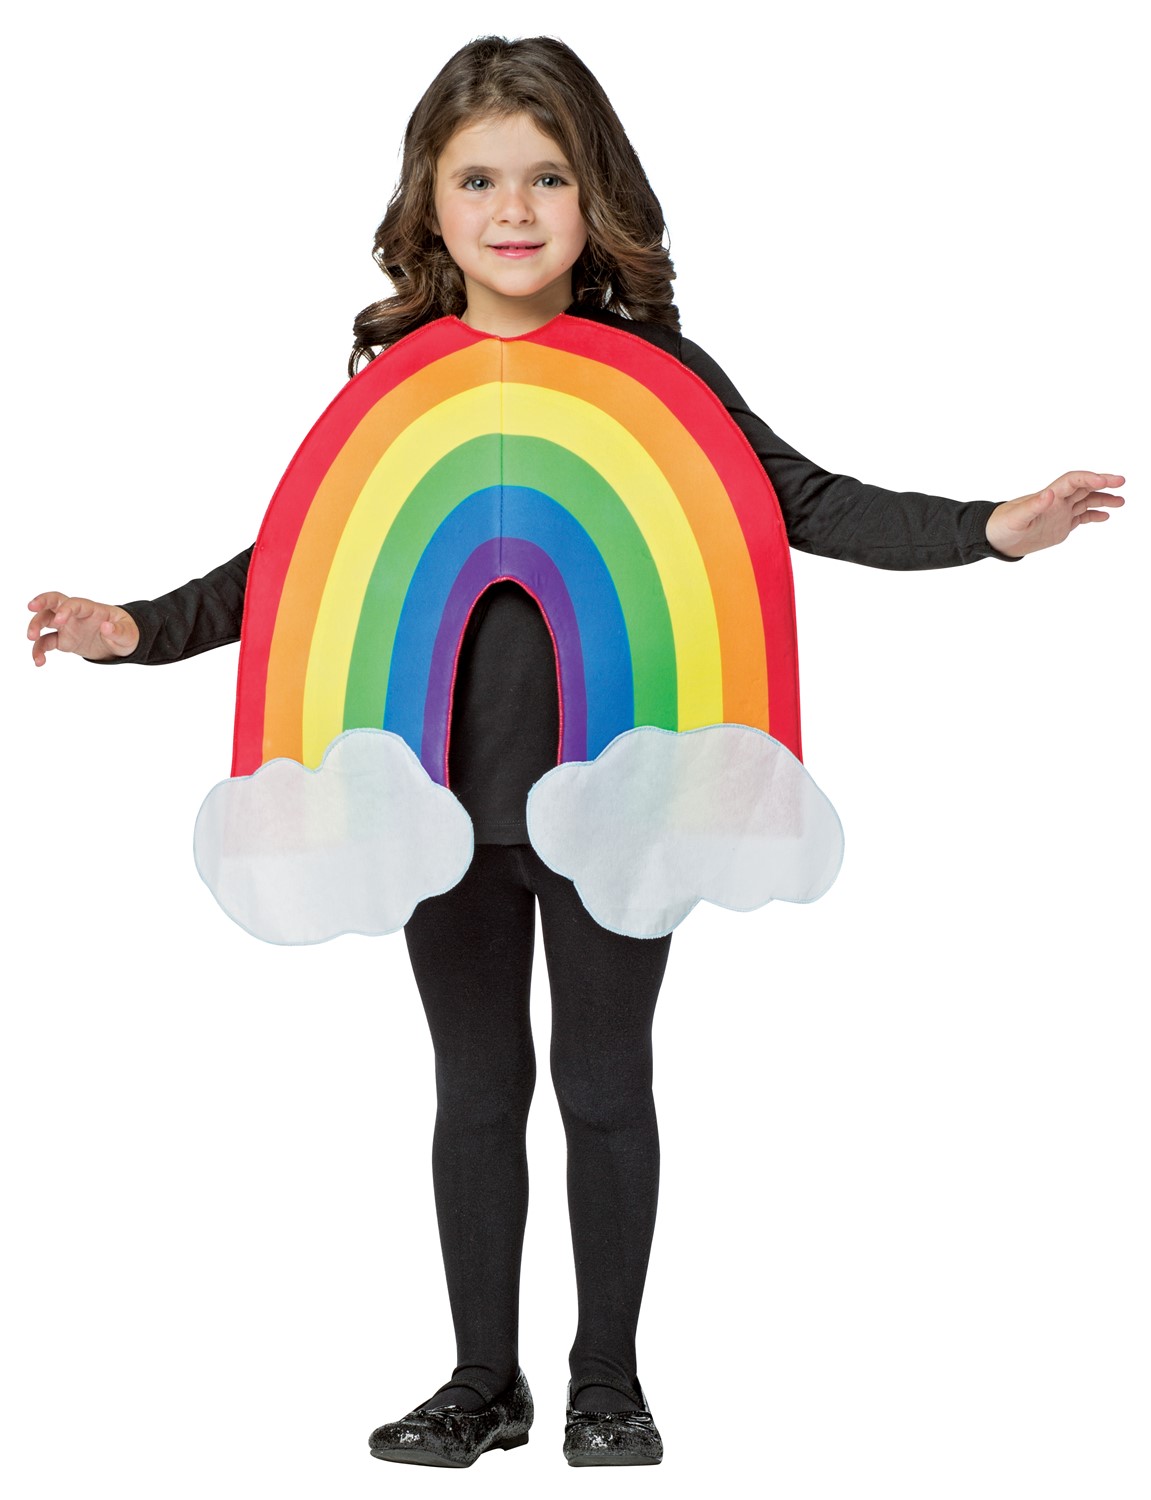 Costumes for Kids, Rainbow Costume